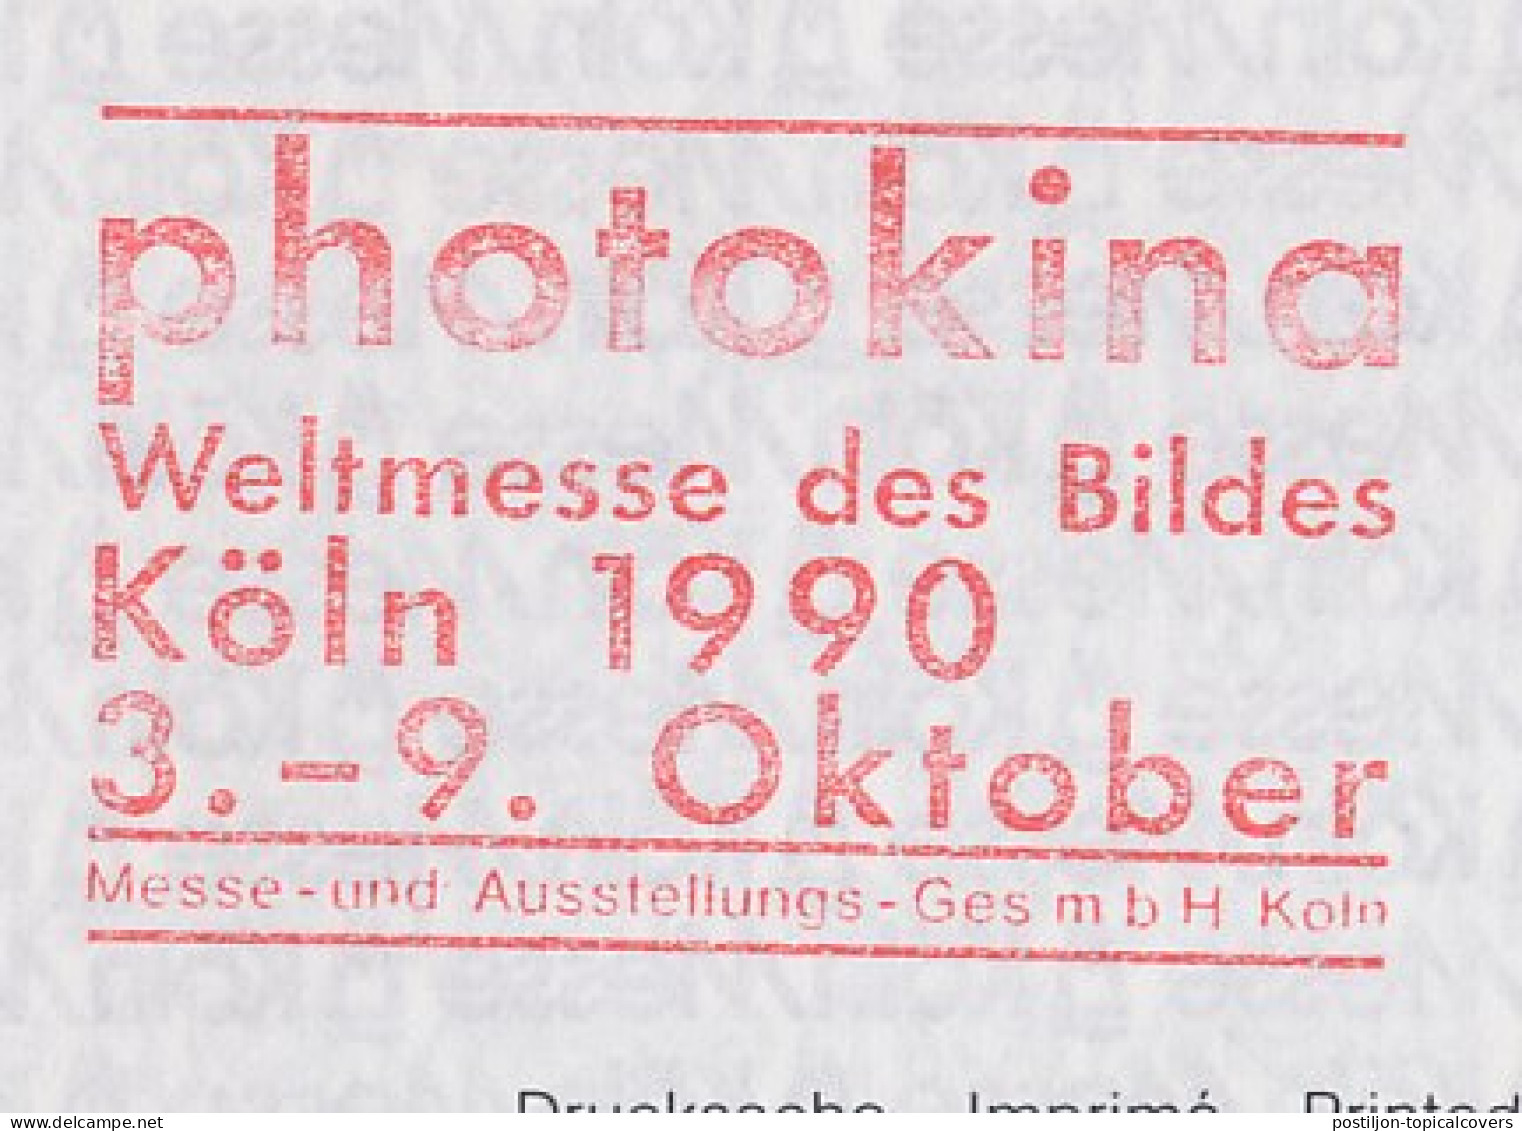 Meter Cover Germany 1990 Photokina - Worlds Fair Of Image - Fotografia